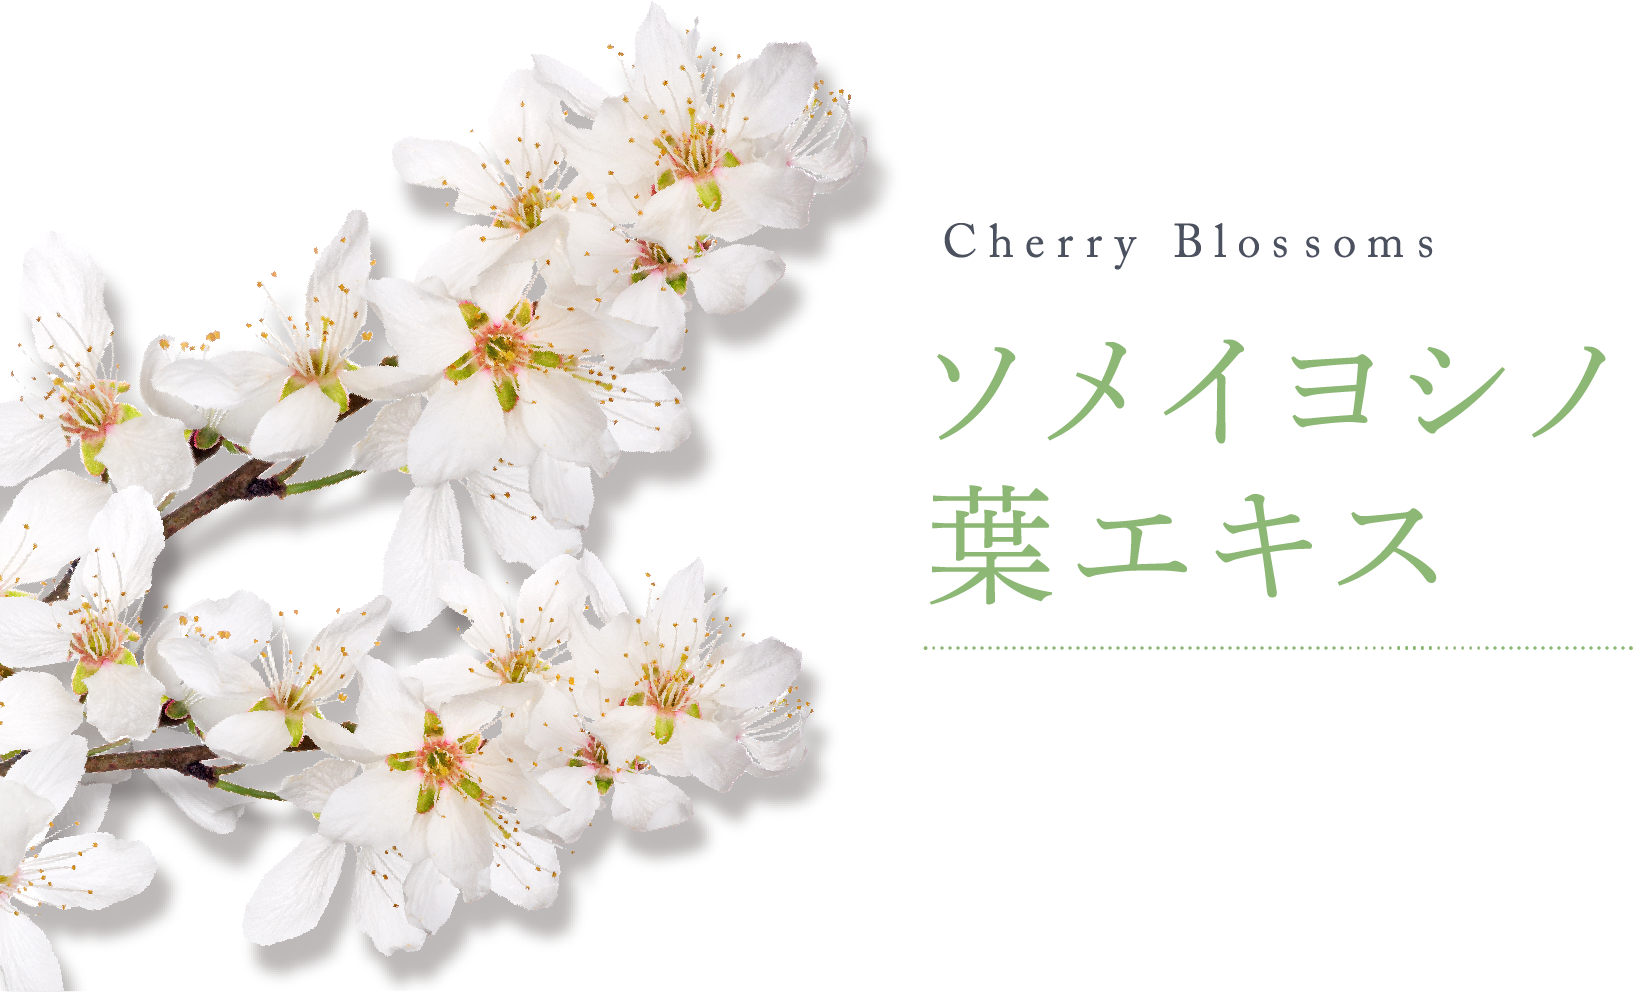 Cherry Blossoms ソメイヨシノ 葉エキス